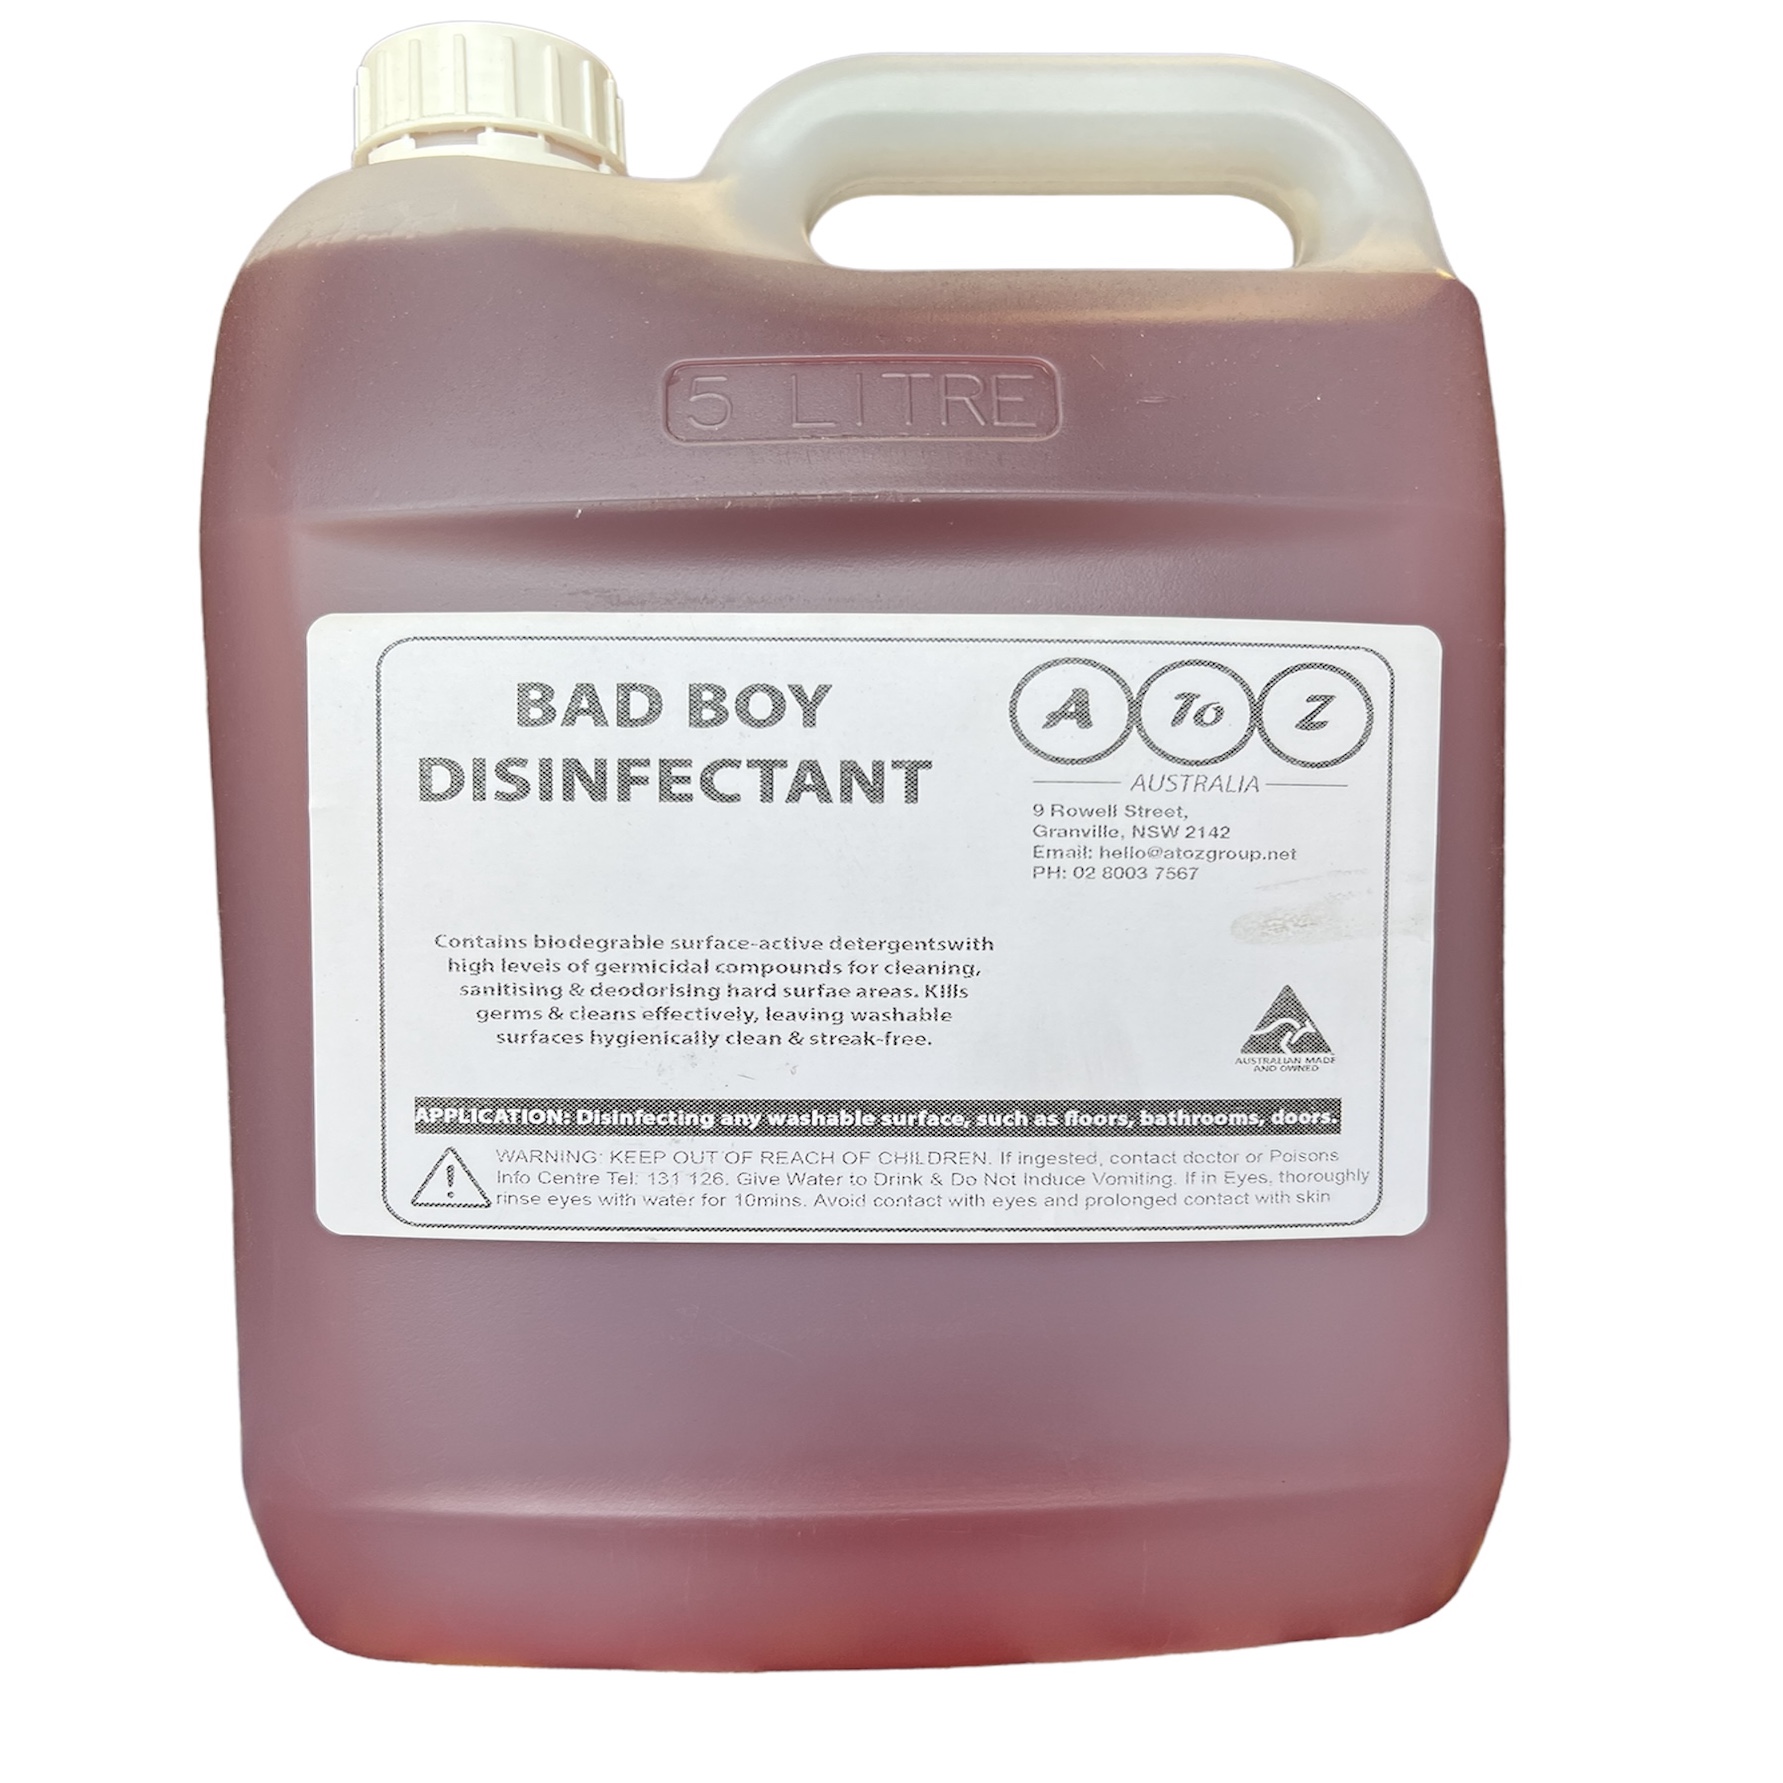 Bad Boy Disinfactant